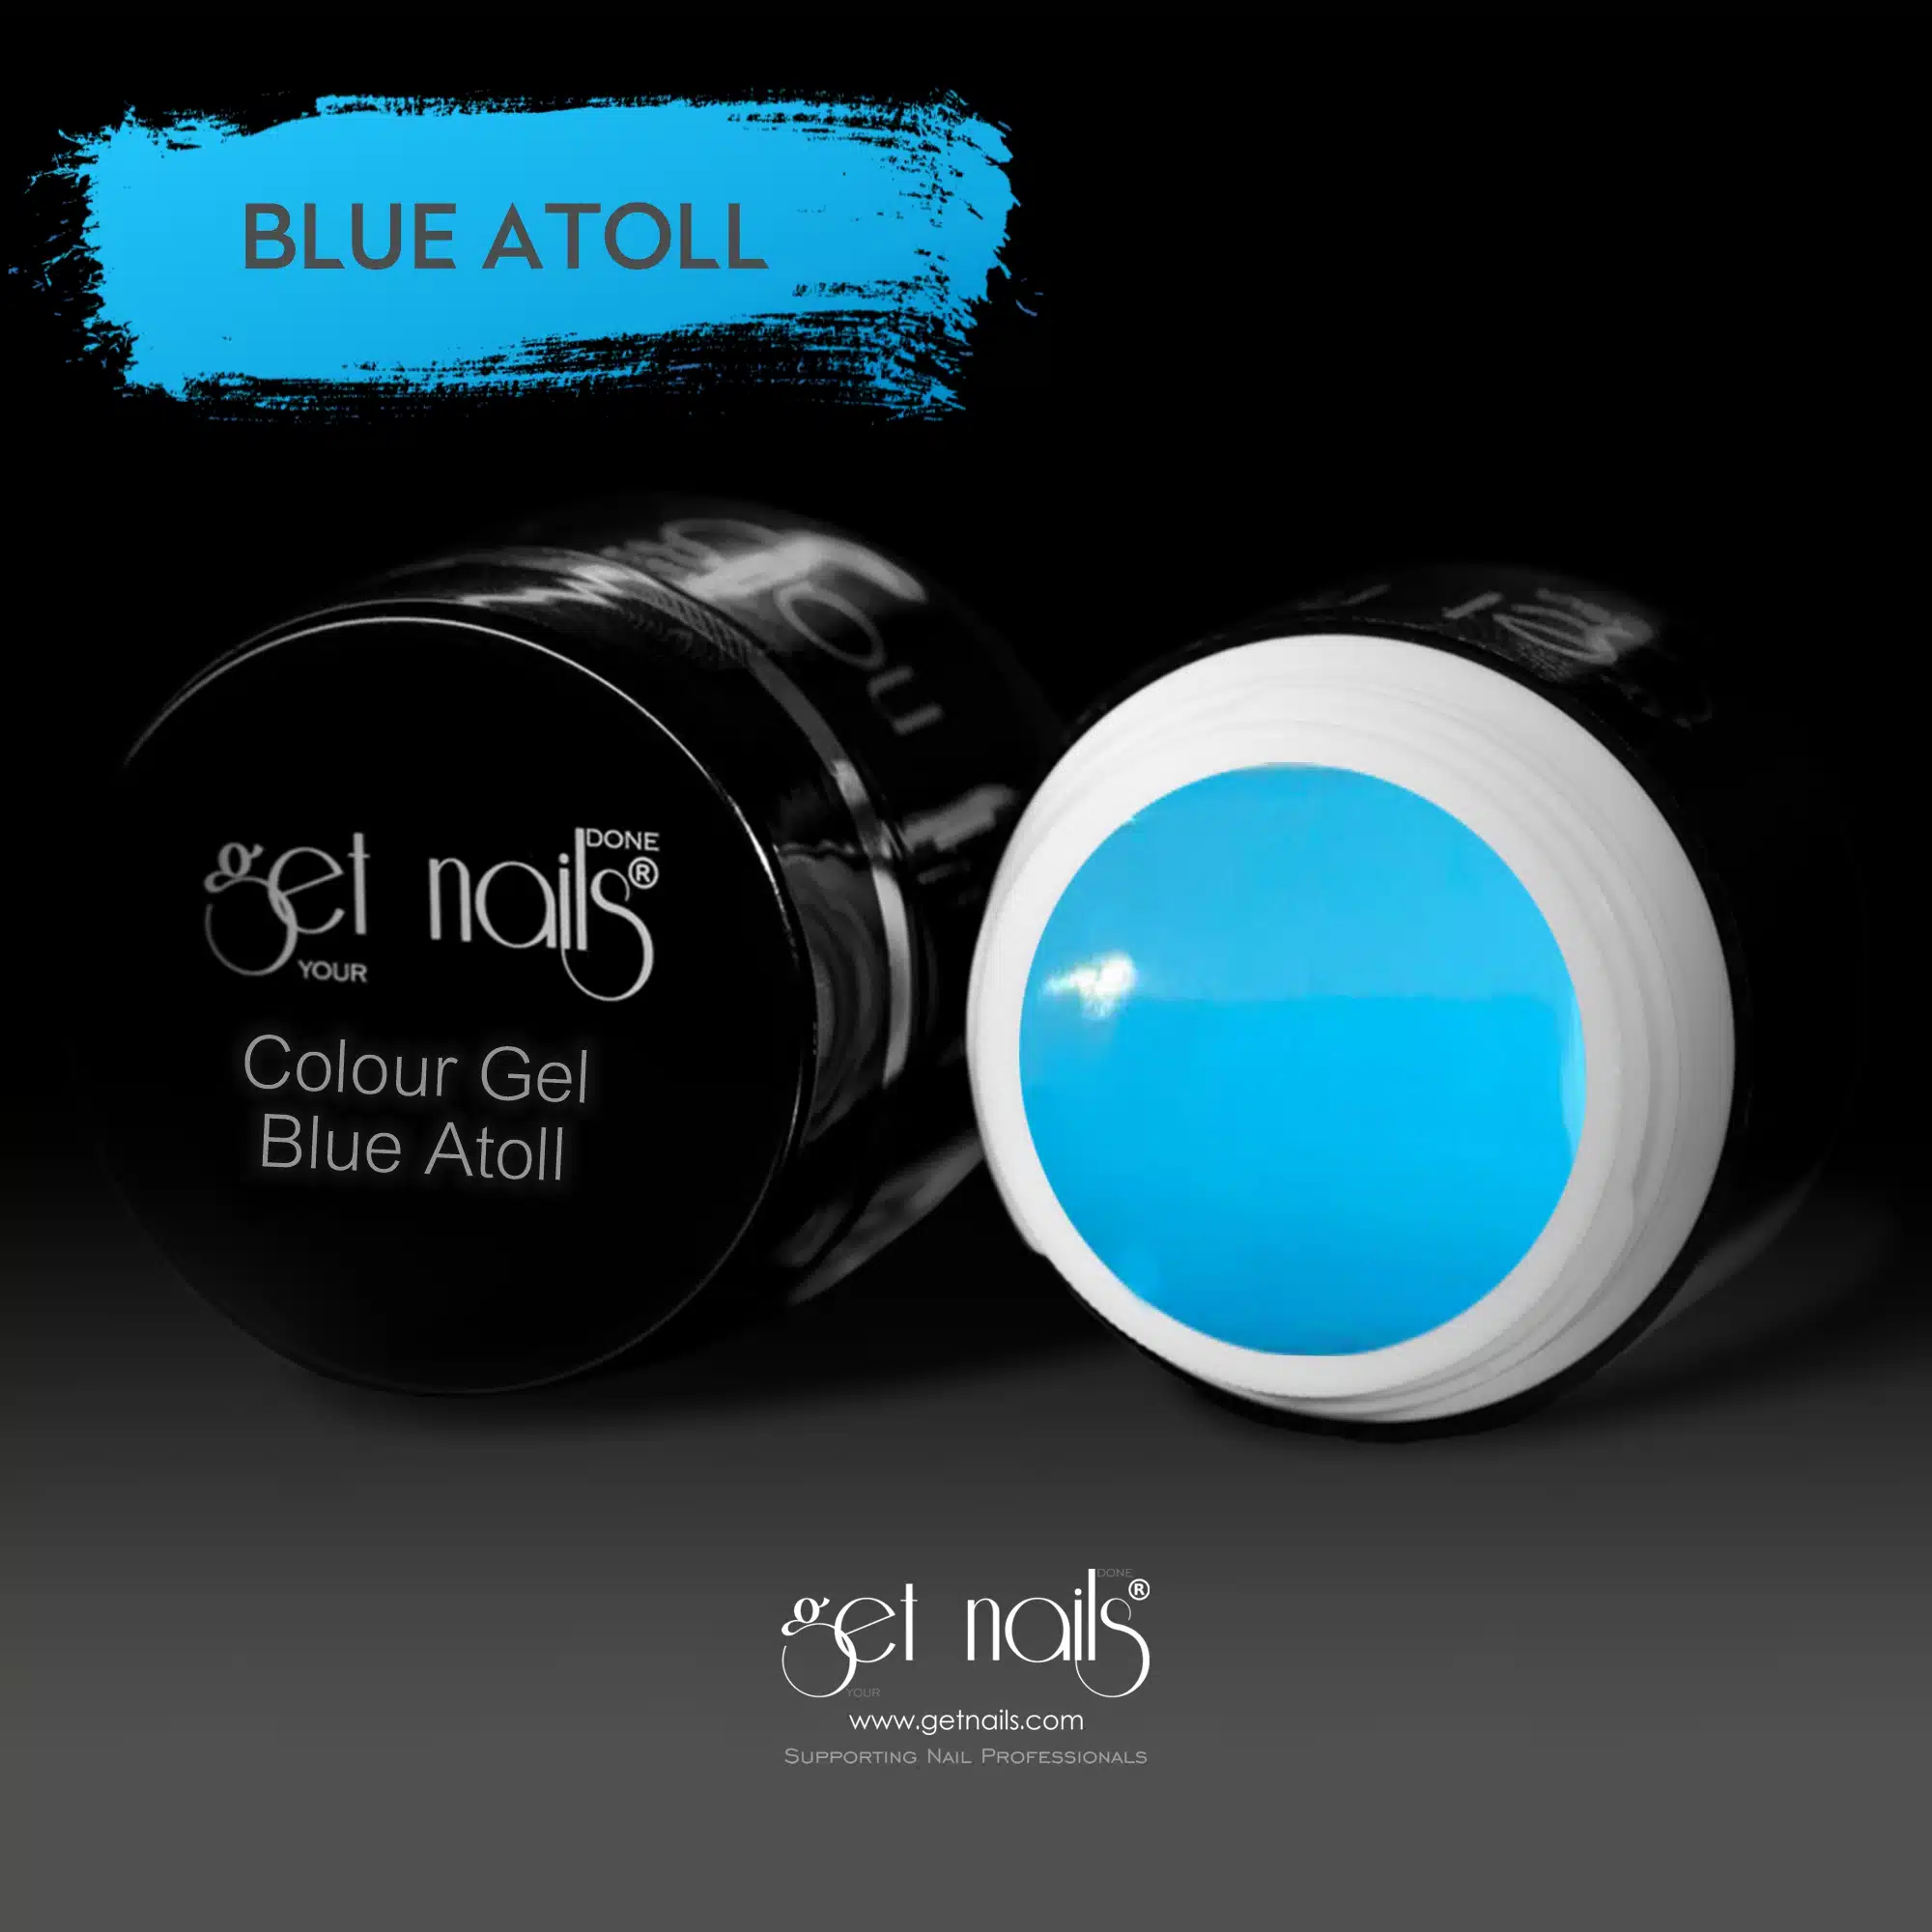 Get Nails Austria - Color Gel Blue Atoll 5g